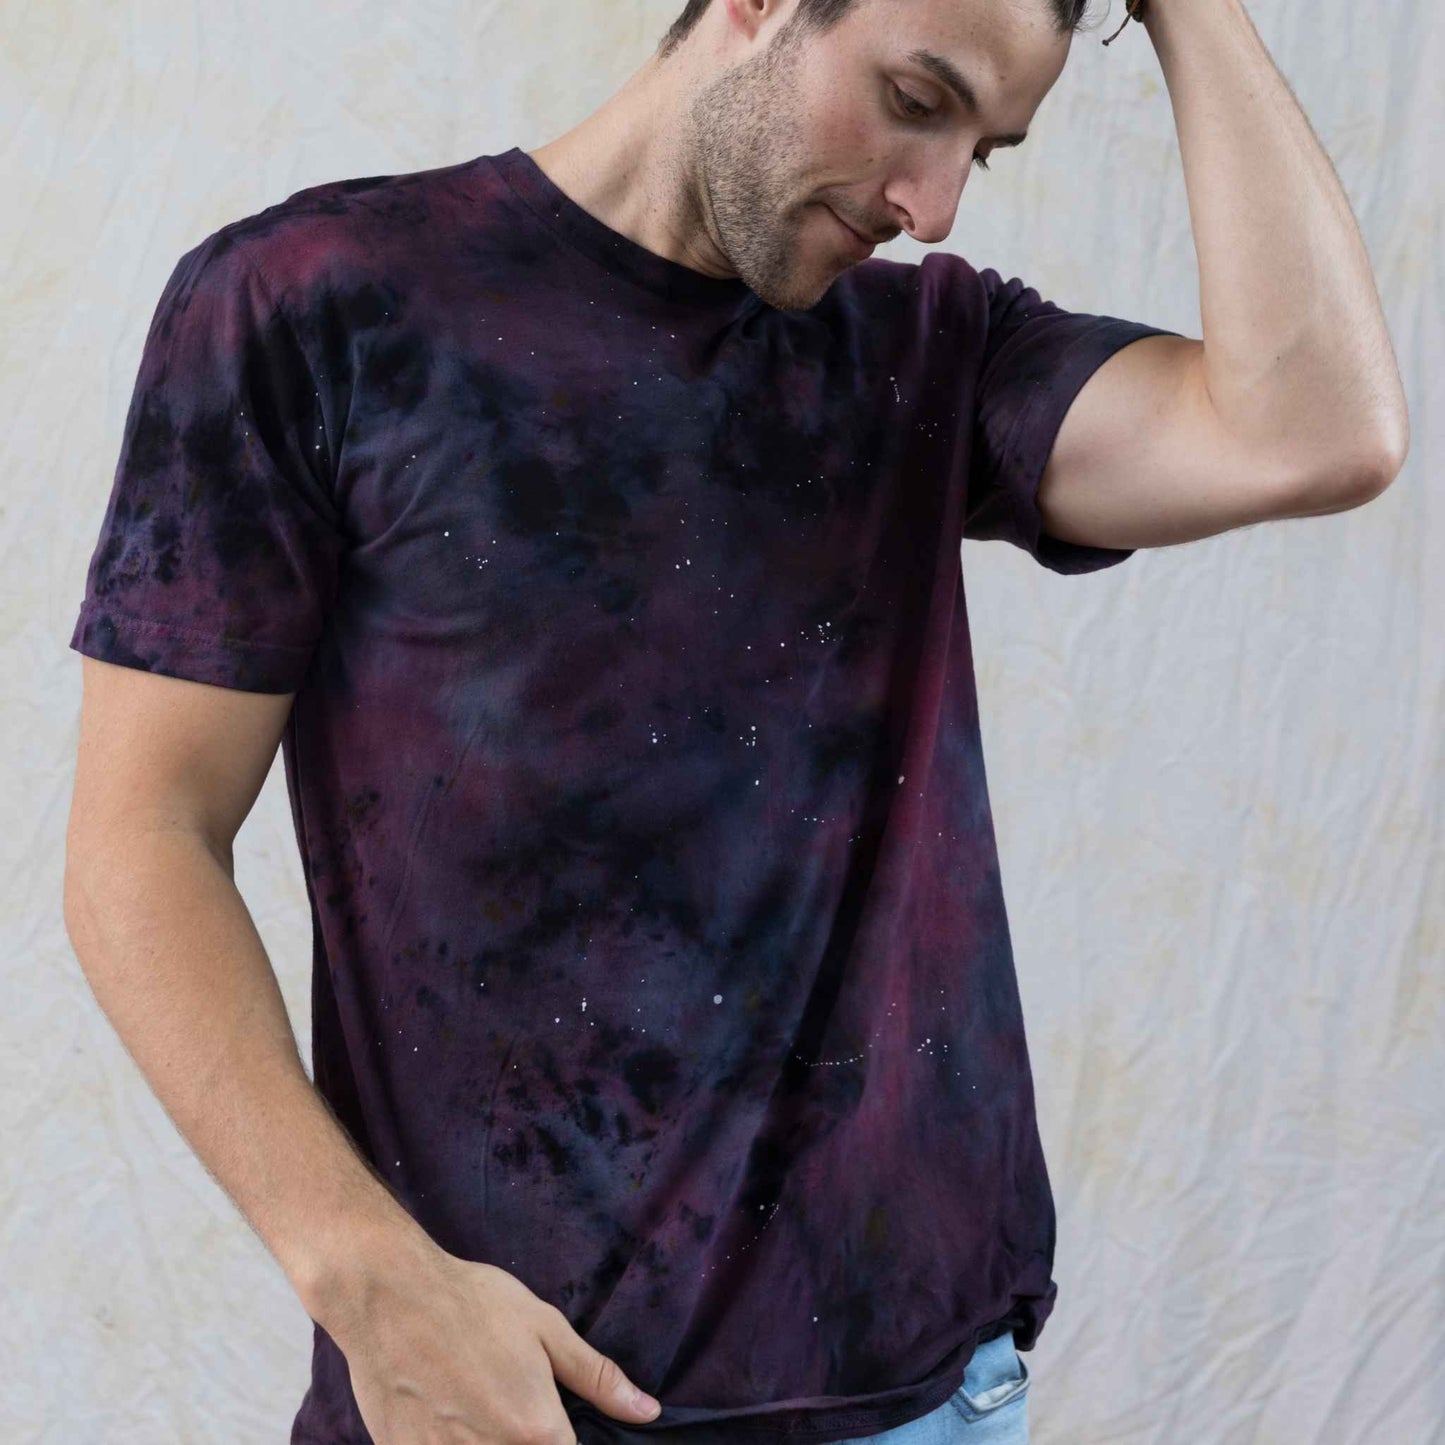 Galaxy maroon black constellation nebula tie dye shirt cotton shirt for astronomy